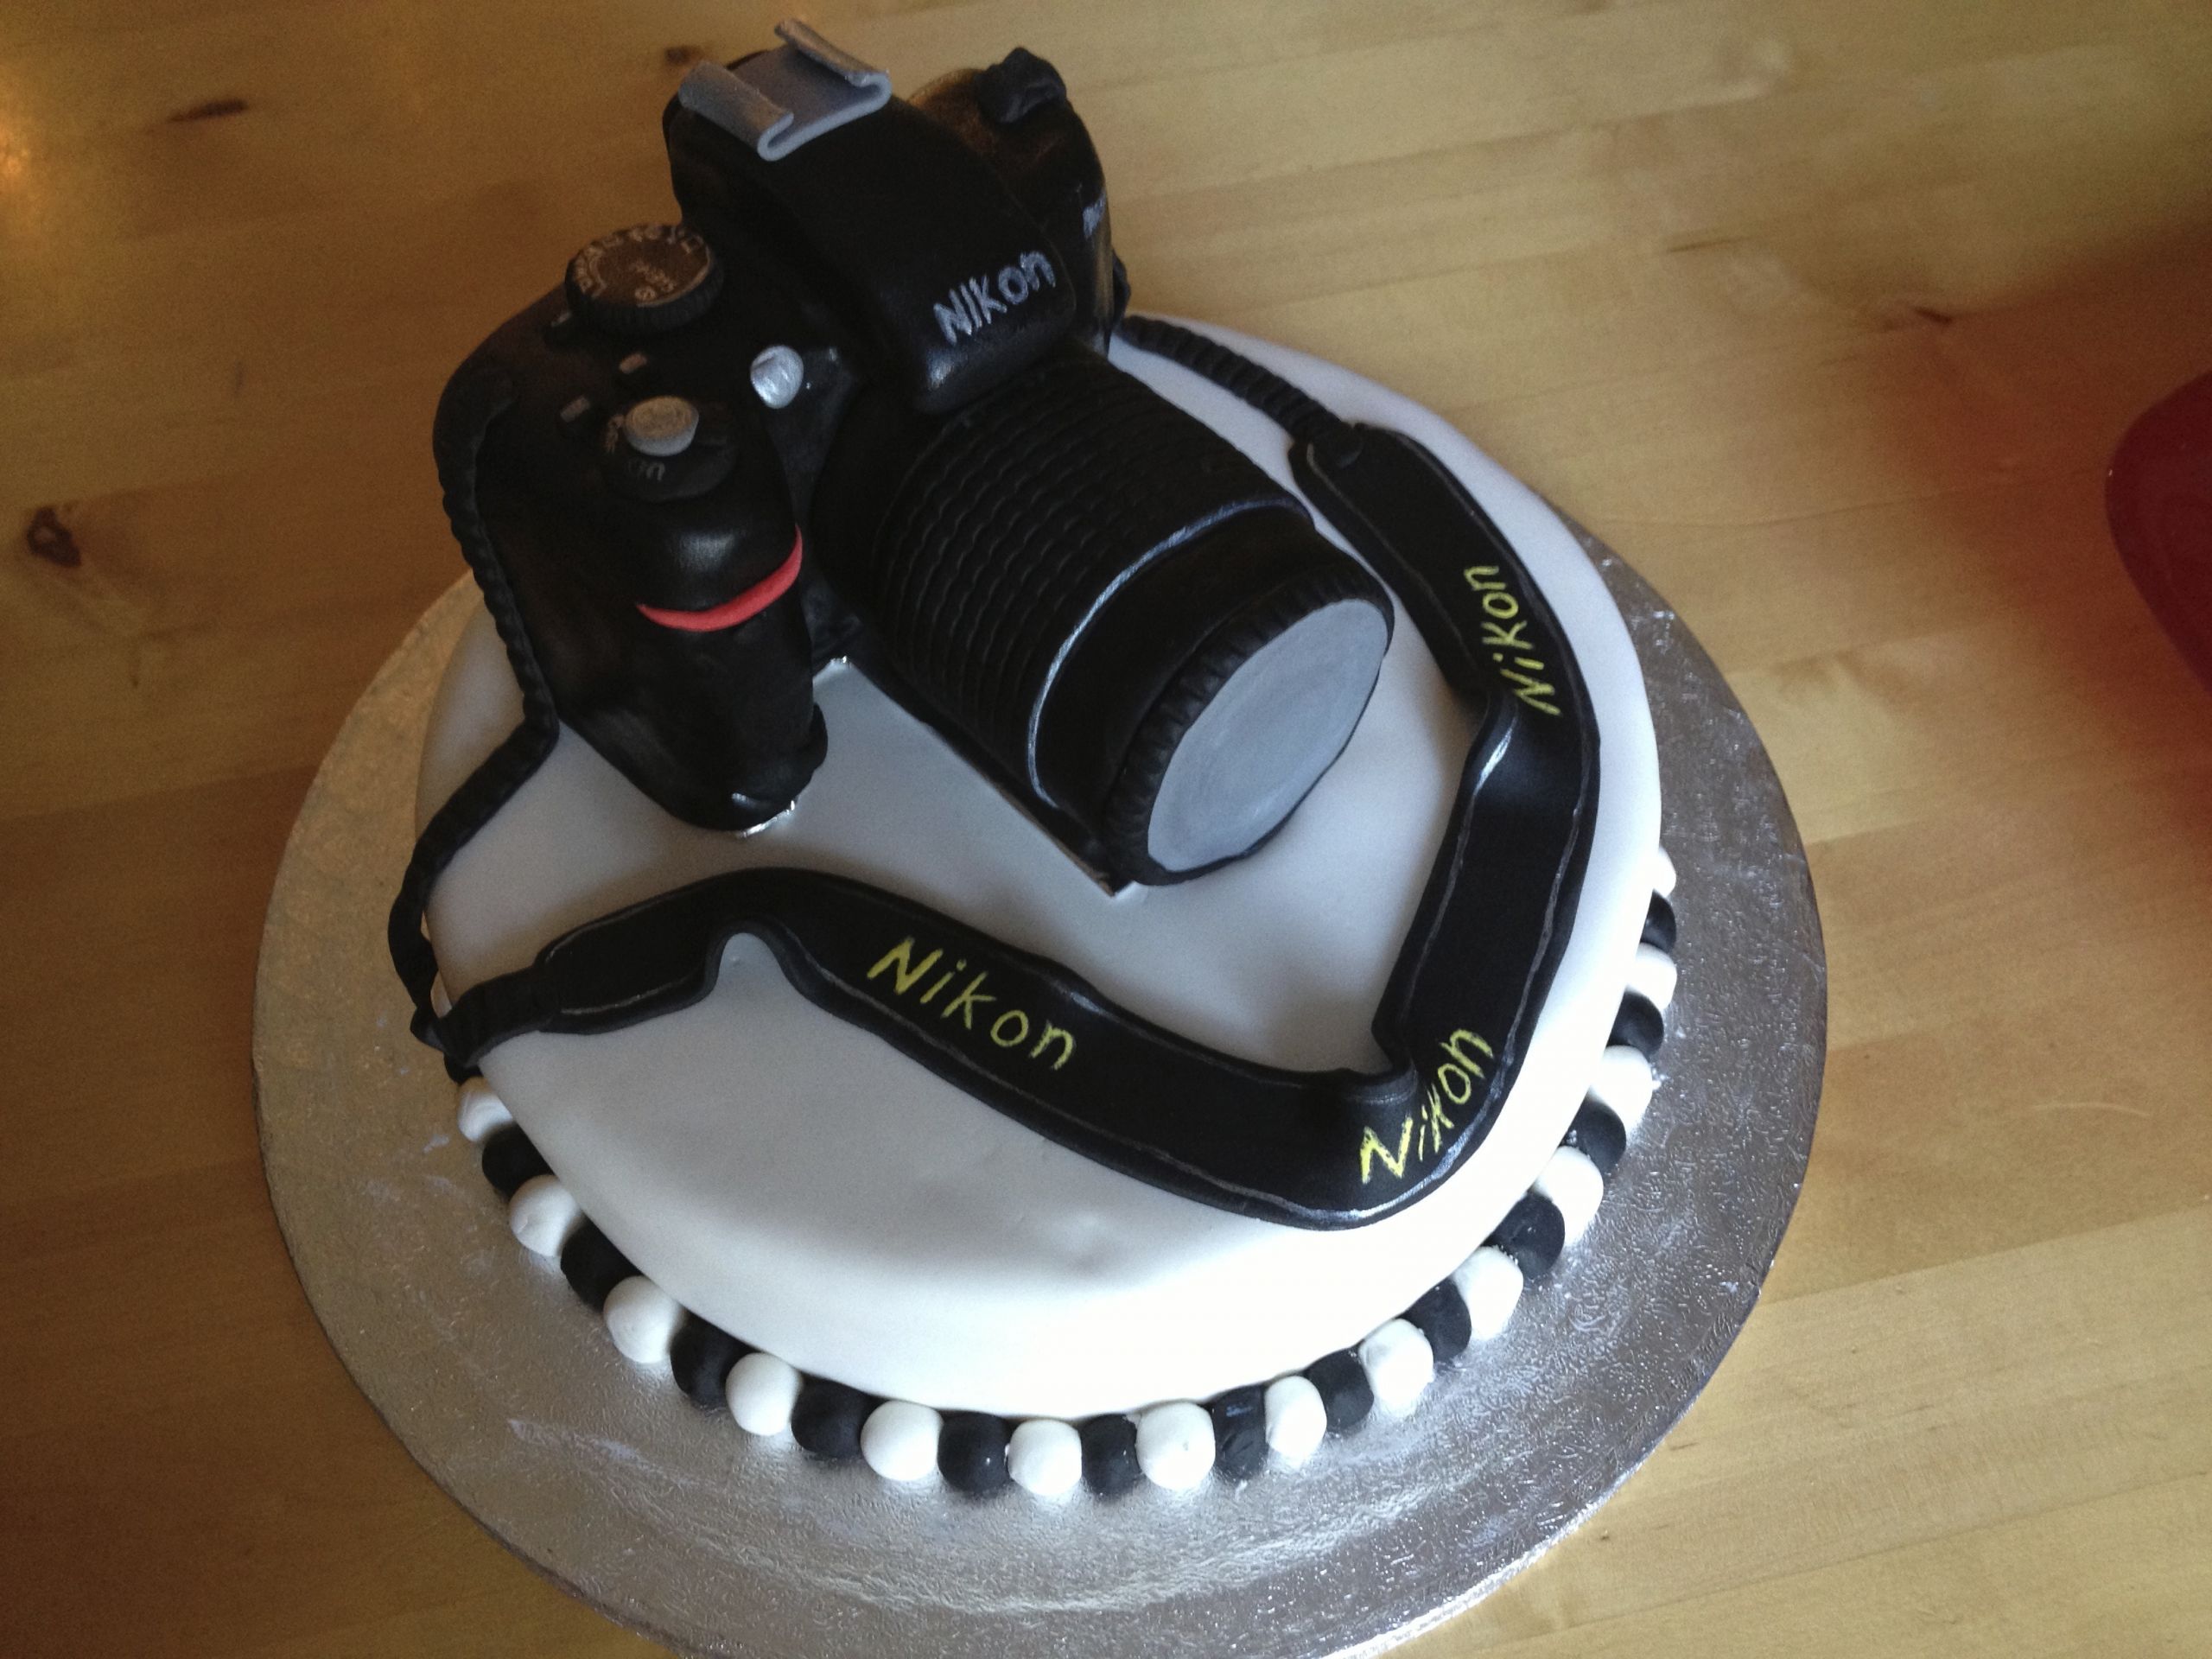 Camera Birthday Cake
 18th Birthday Camera Cake